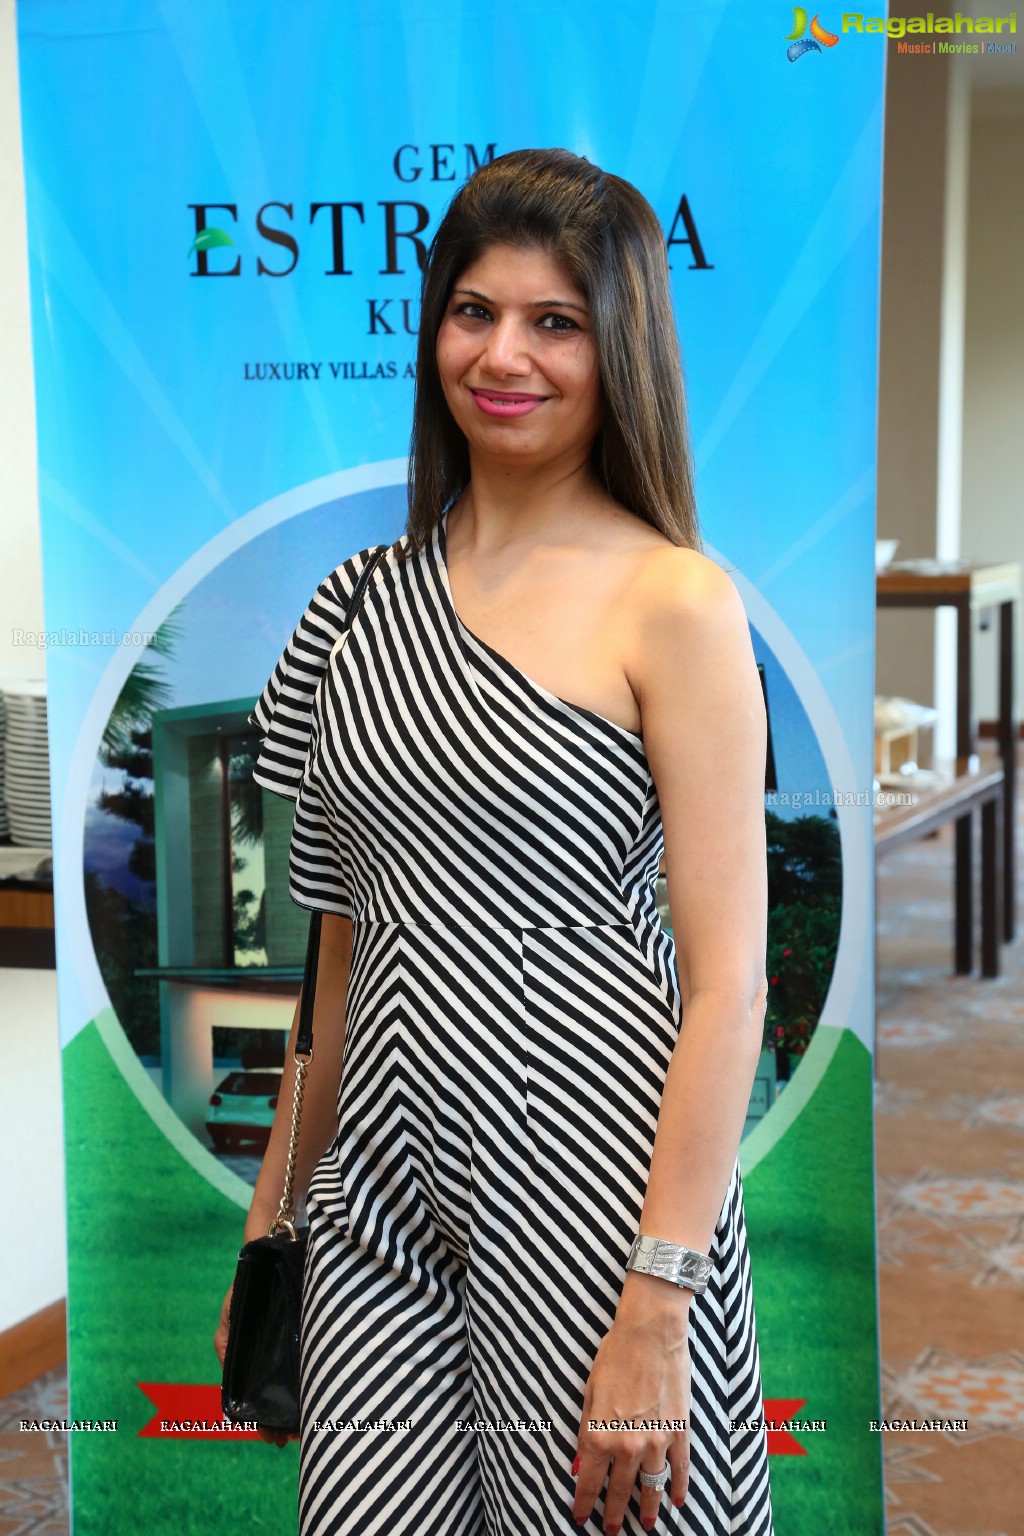 Gem Estrella Kuber Luxury Villas Launch Conference at The Hyatt Place